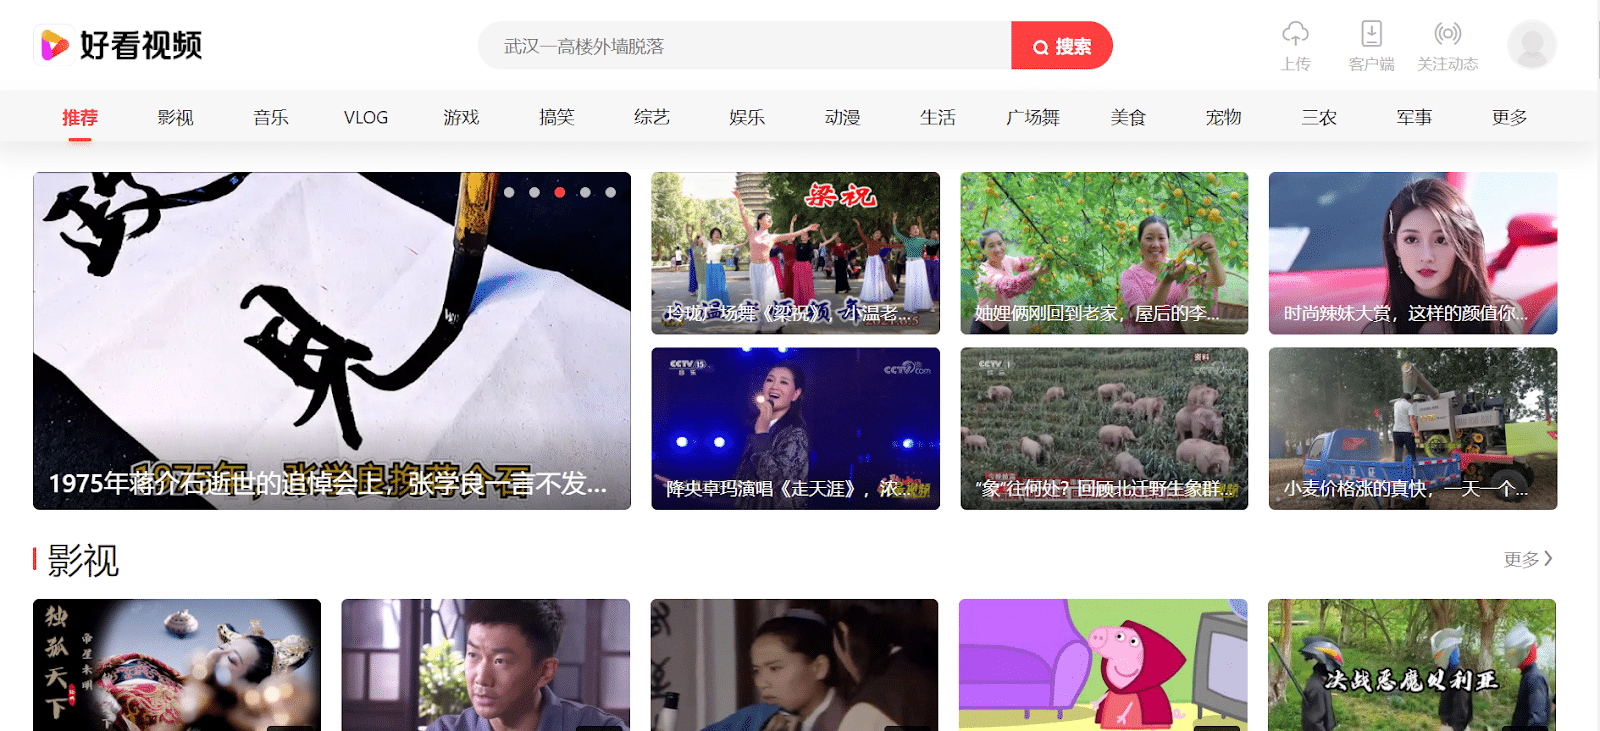 Baidu, China’s biggest search engine